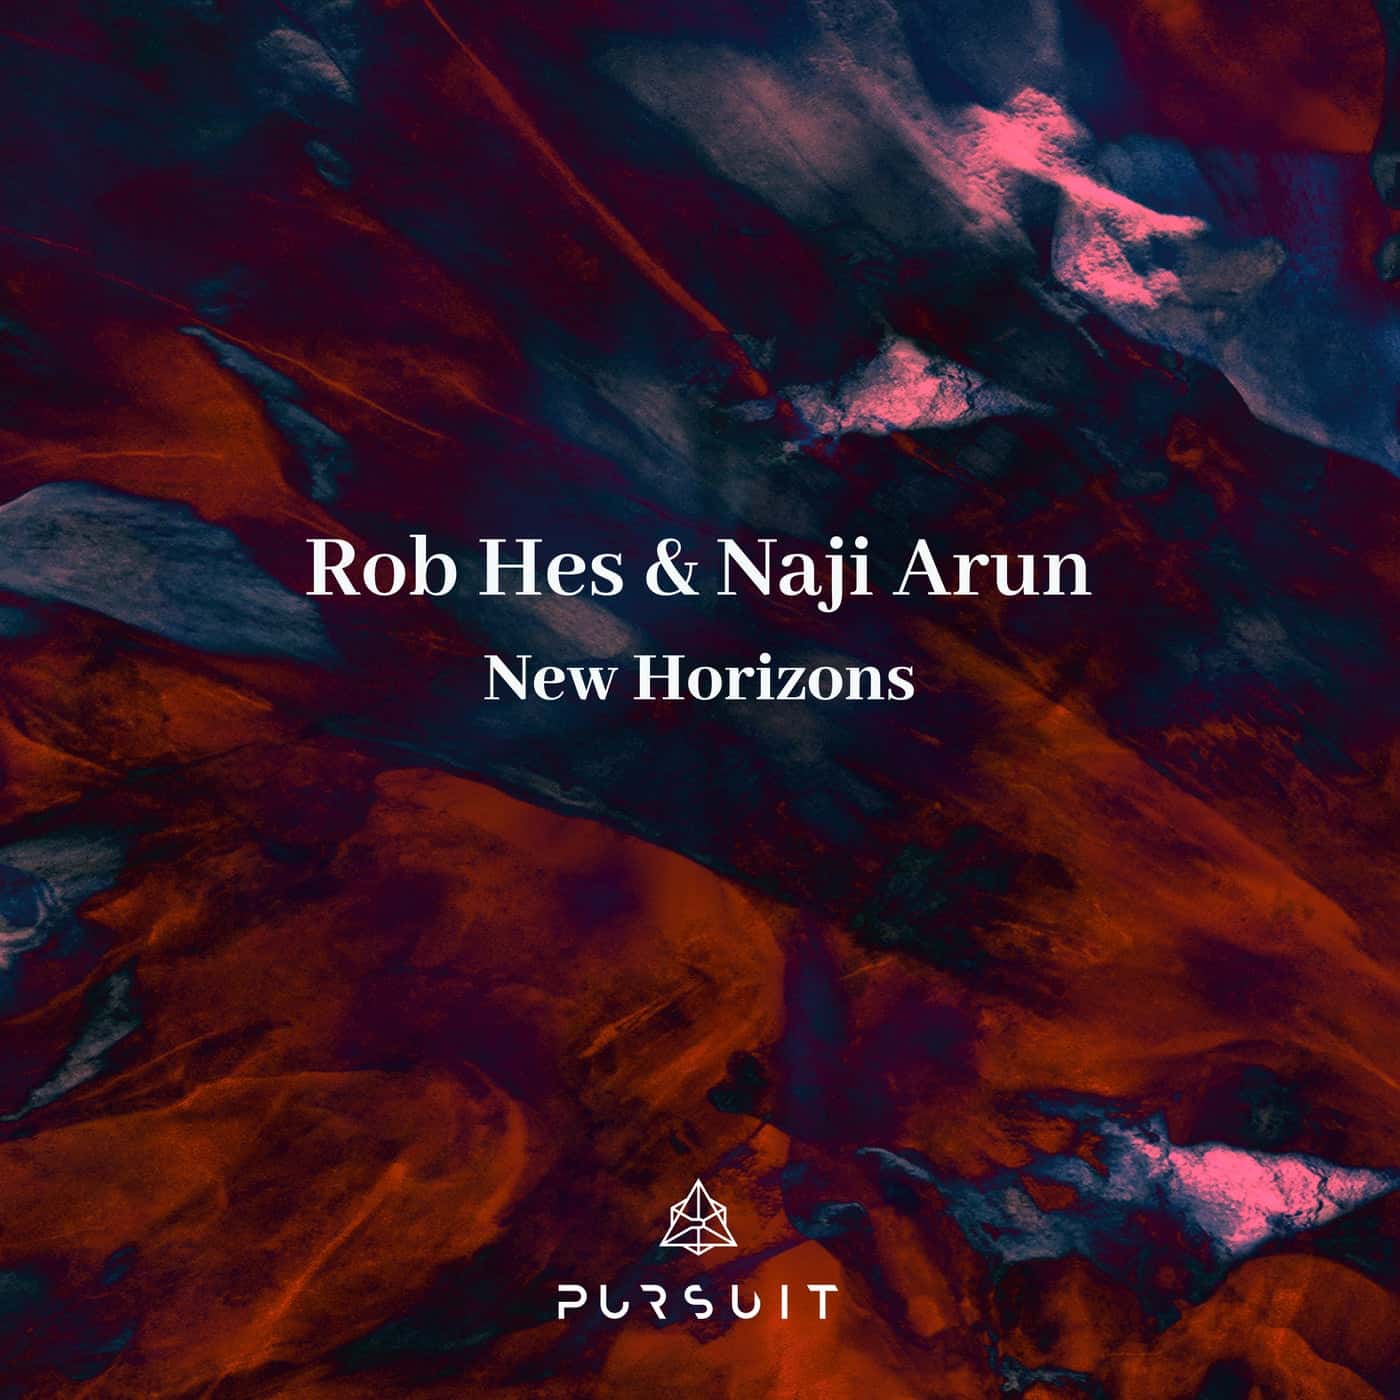 Download Rob Hes, Naji Arun - New Horizons on Electrobuzz